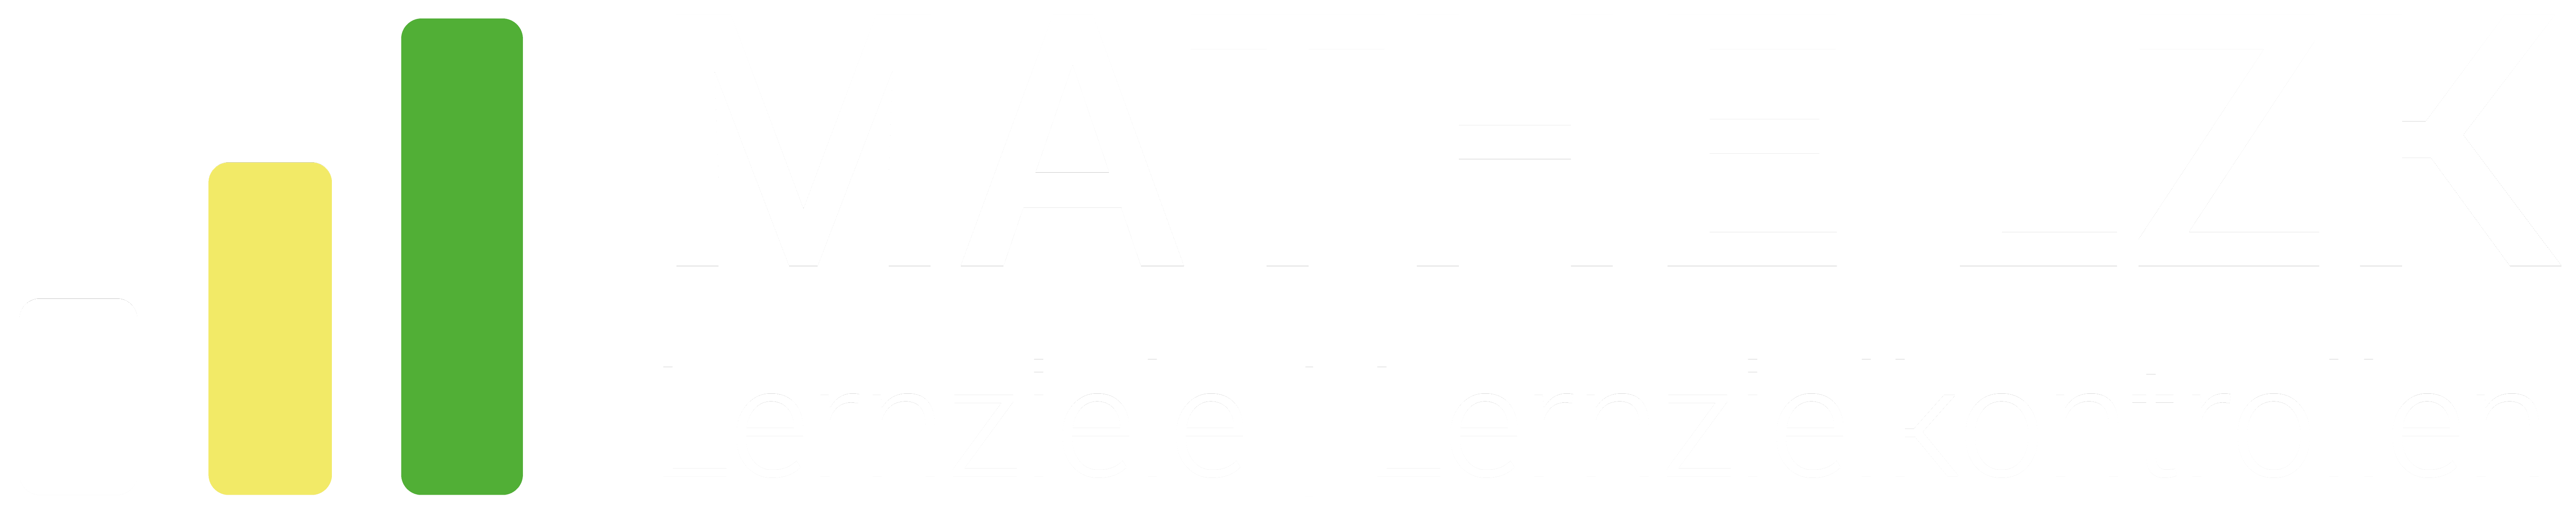 Mathe-LZK